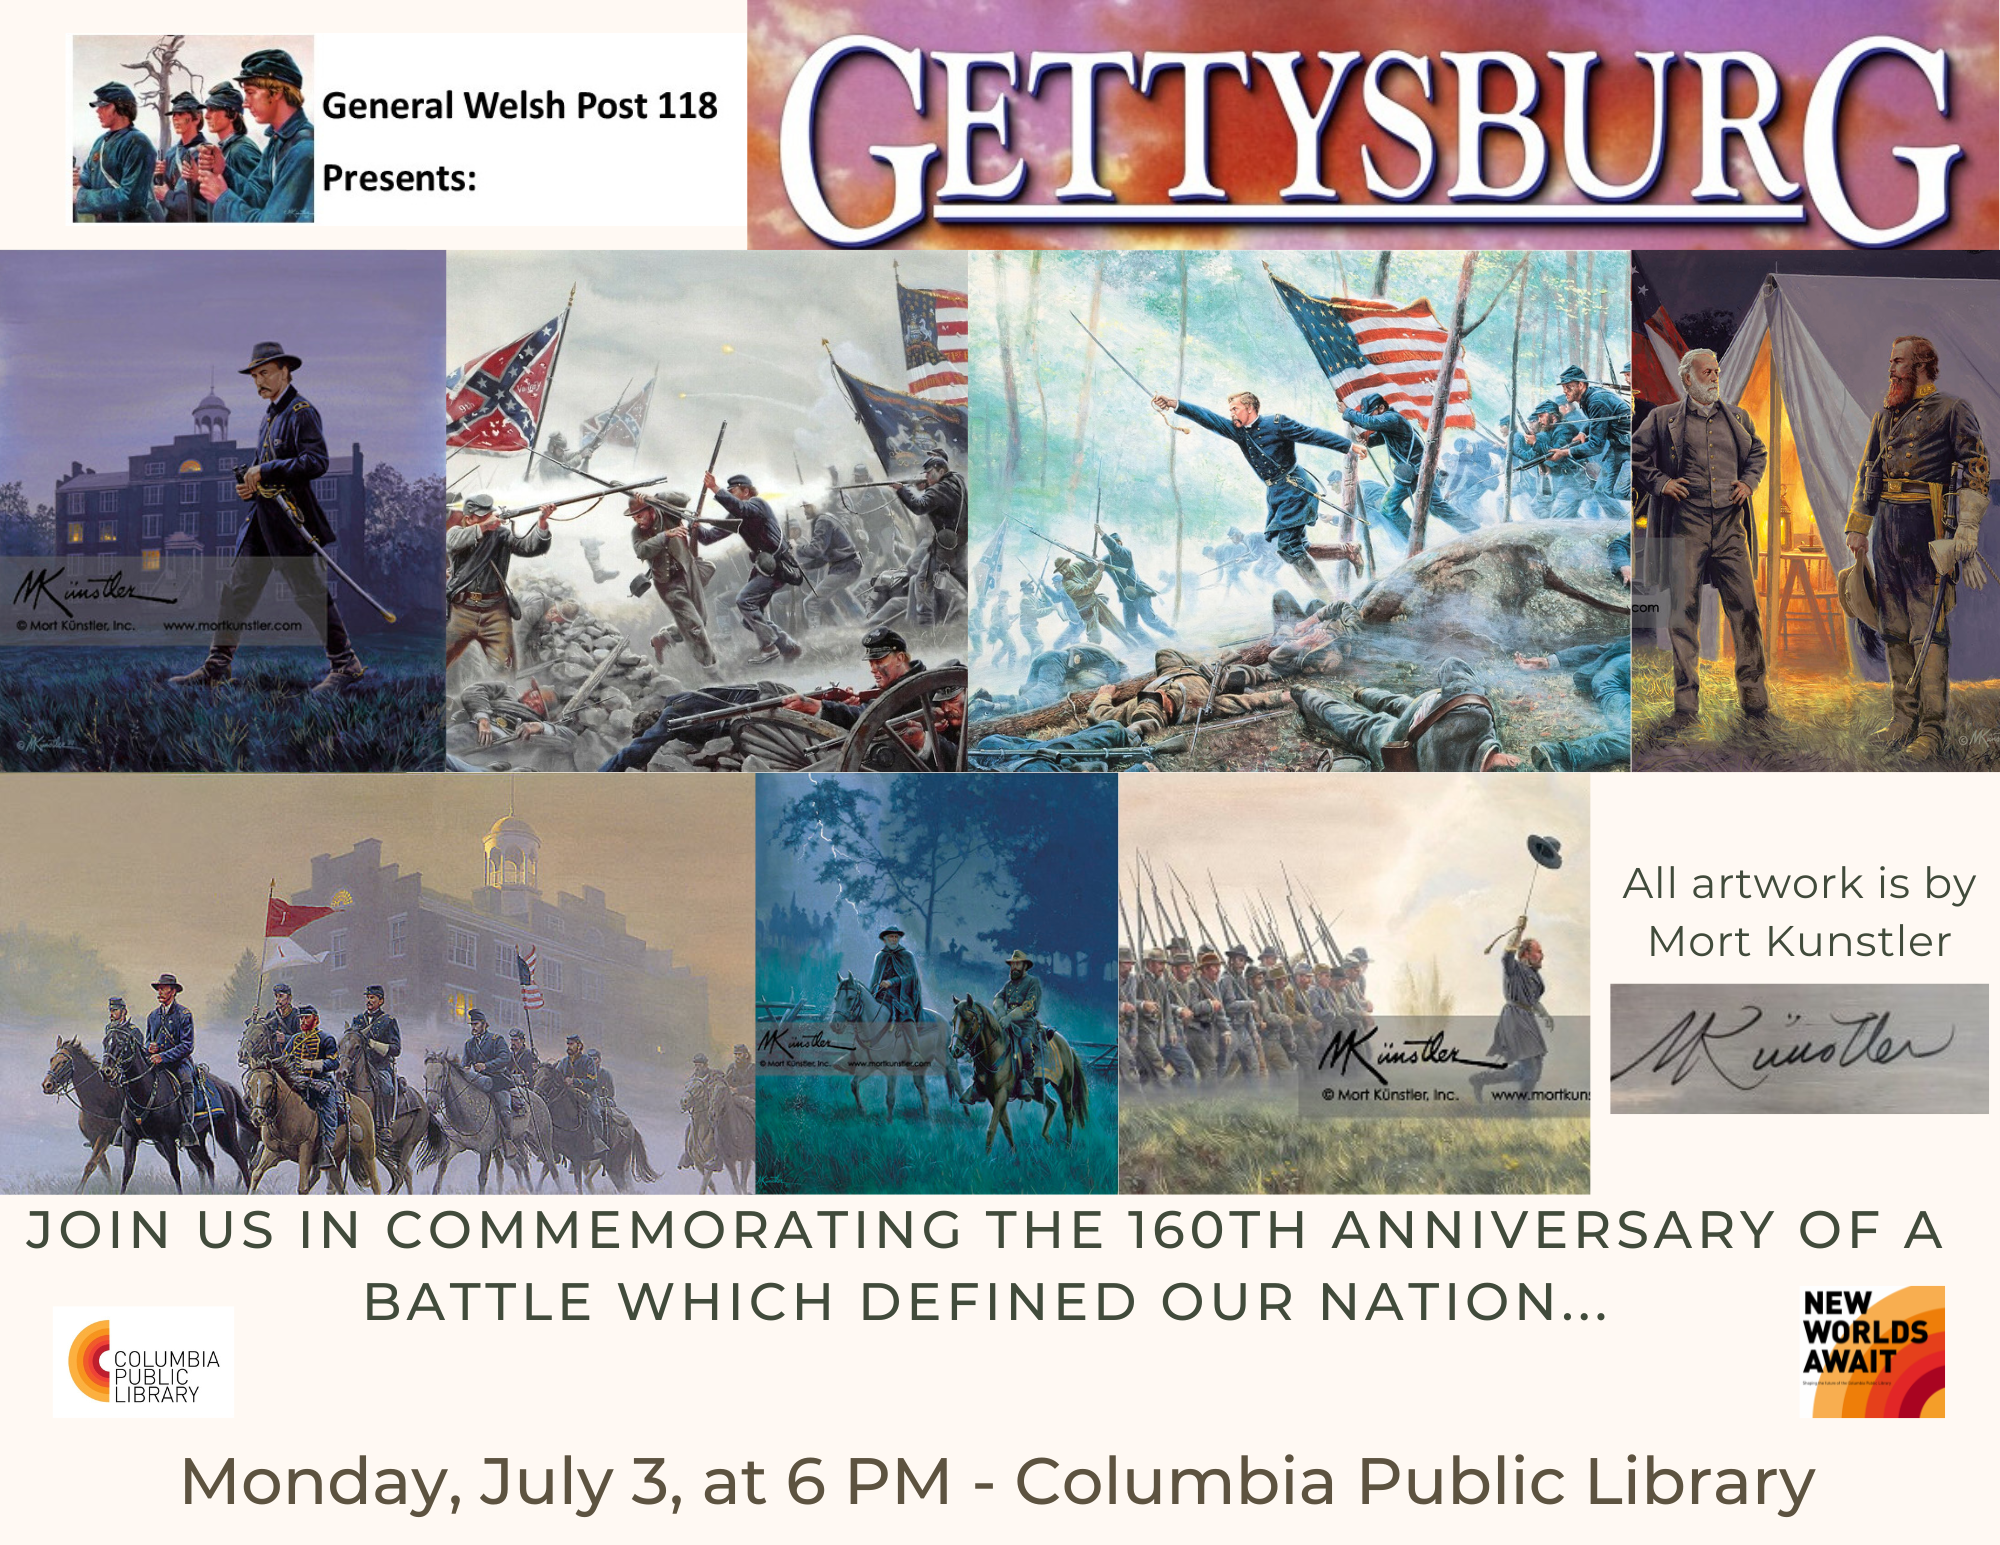 Gettysburg Civil War program to commemorate the 160th anniversary